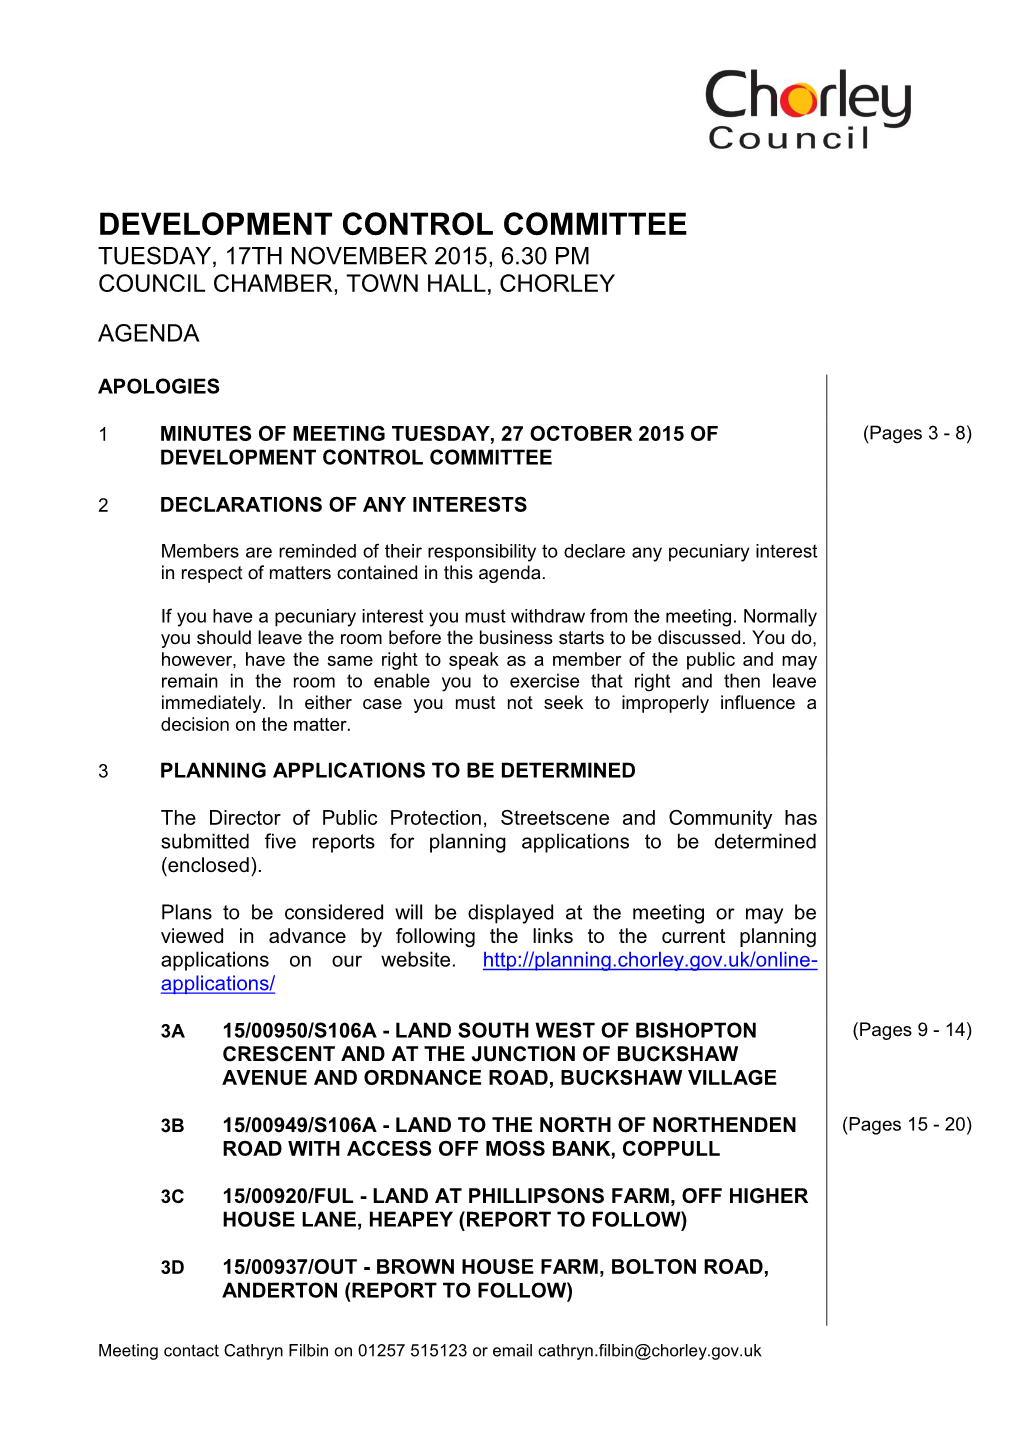 Agenda Document for Development Control Committee, 17/11/2015 18:30